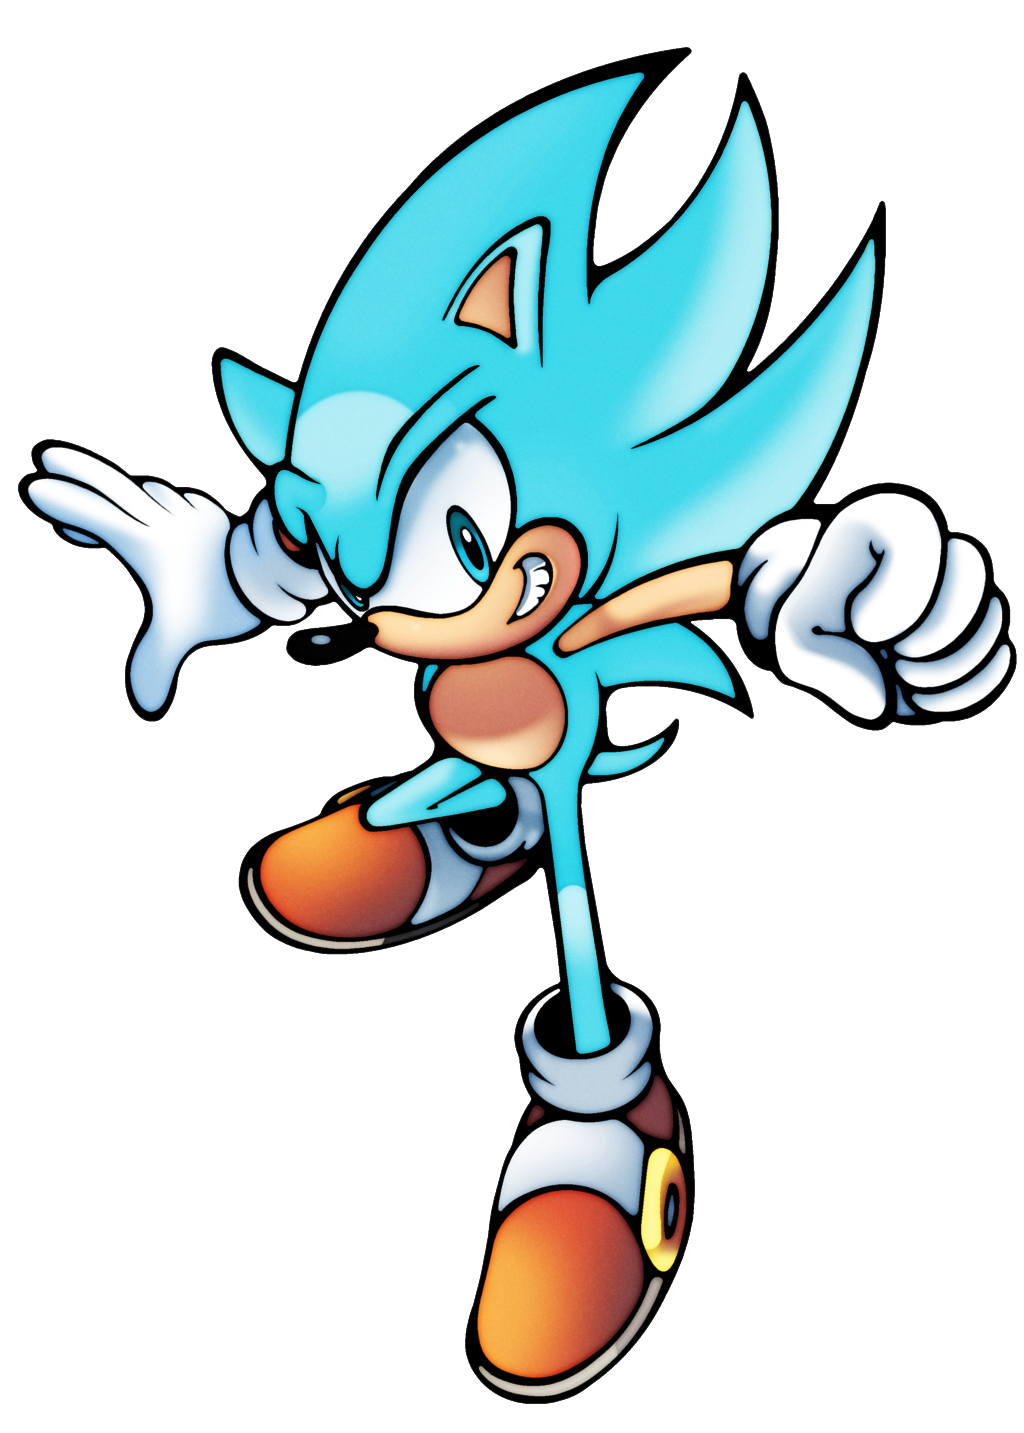 Super Sonic Blue #sonicthehedgehog #supersonic #supersaiyan